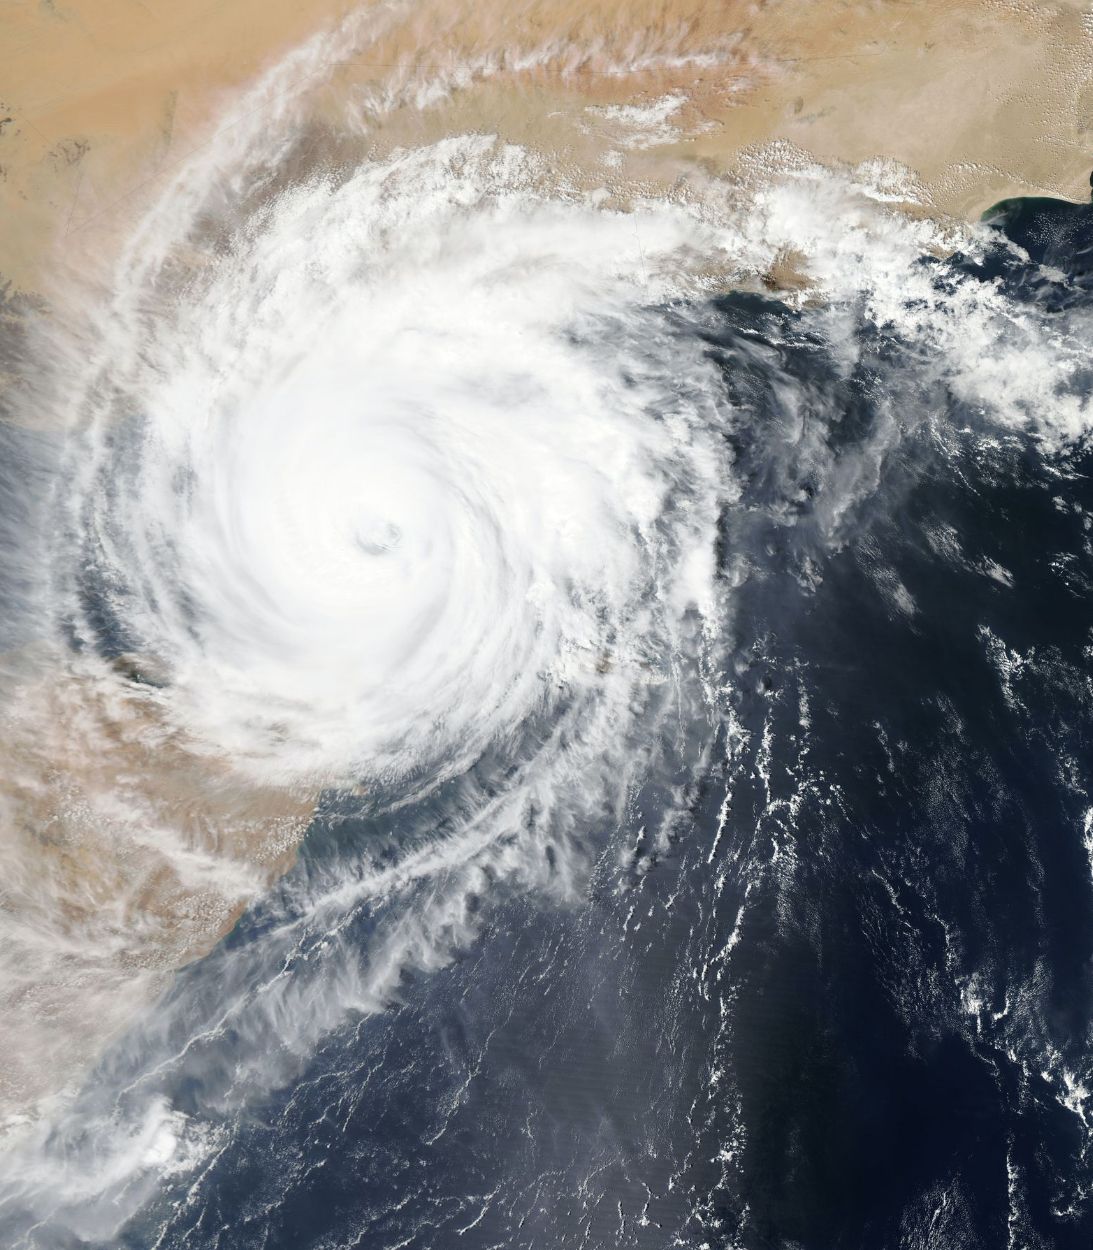 Satellite image of a hurricane approaching land